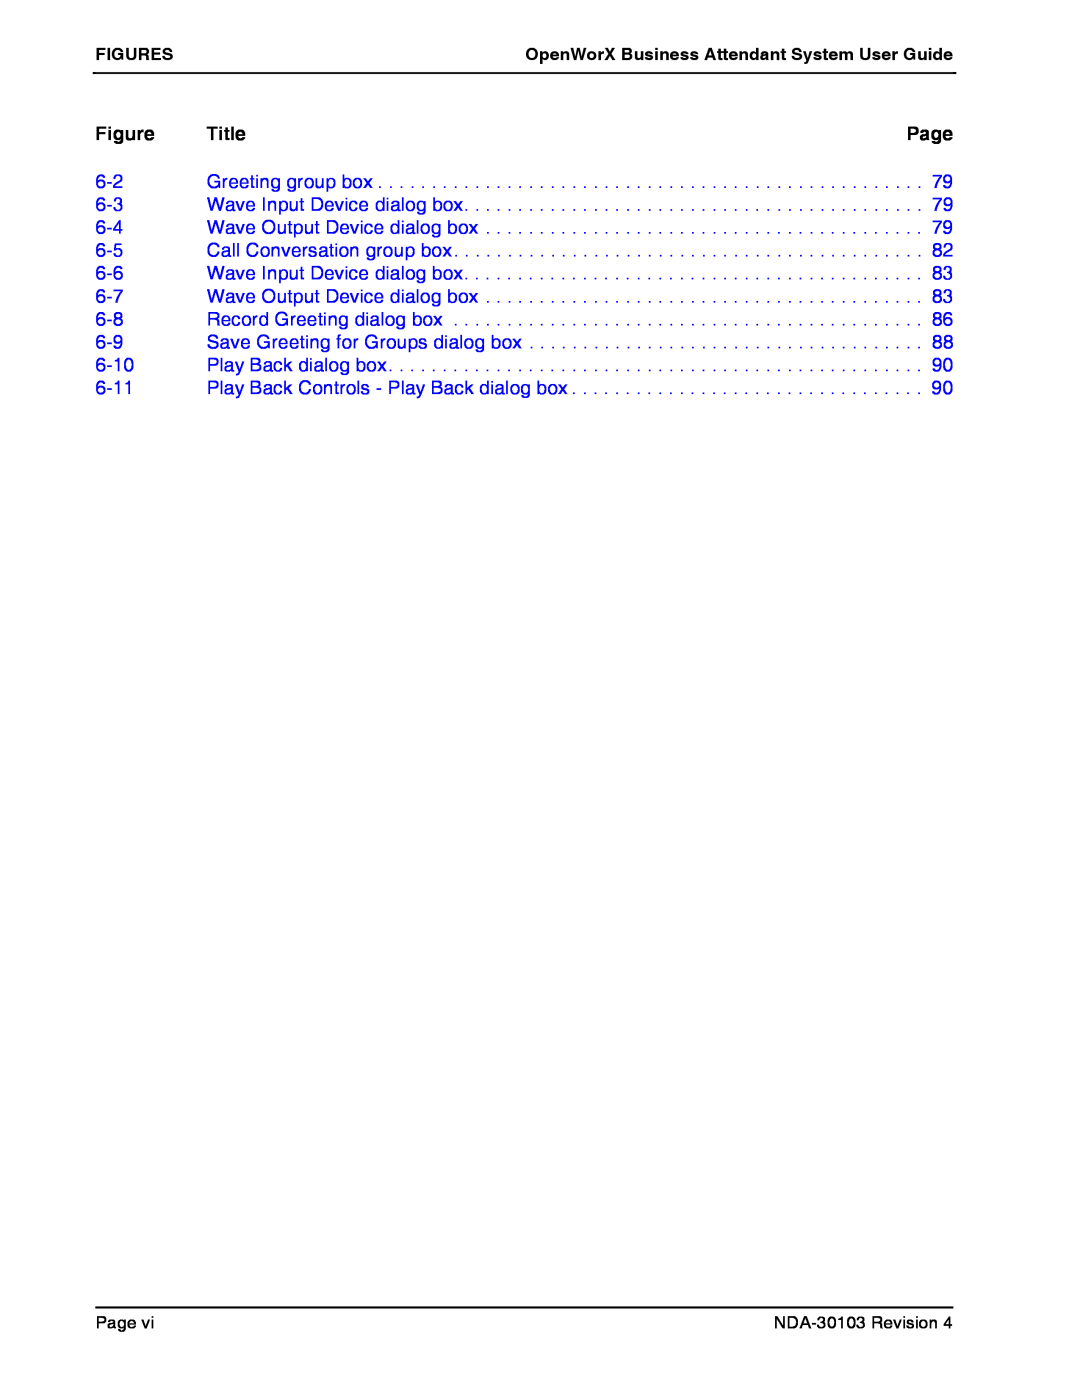 NEC NDA-30103-004 manual Title, Page, Greeting group box 